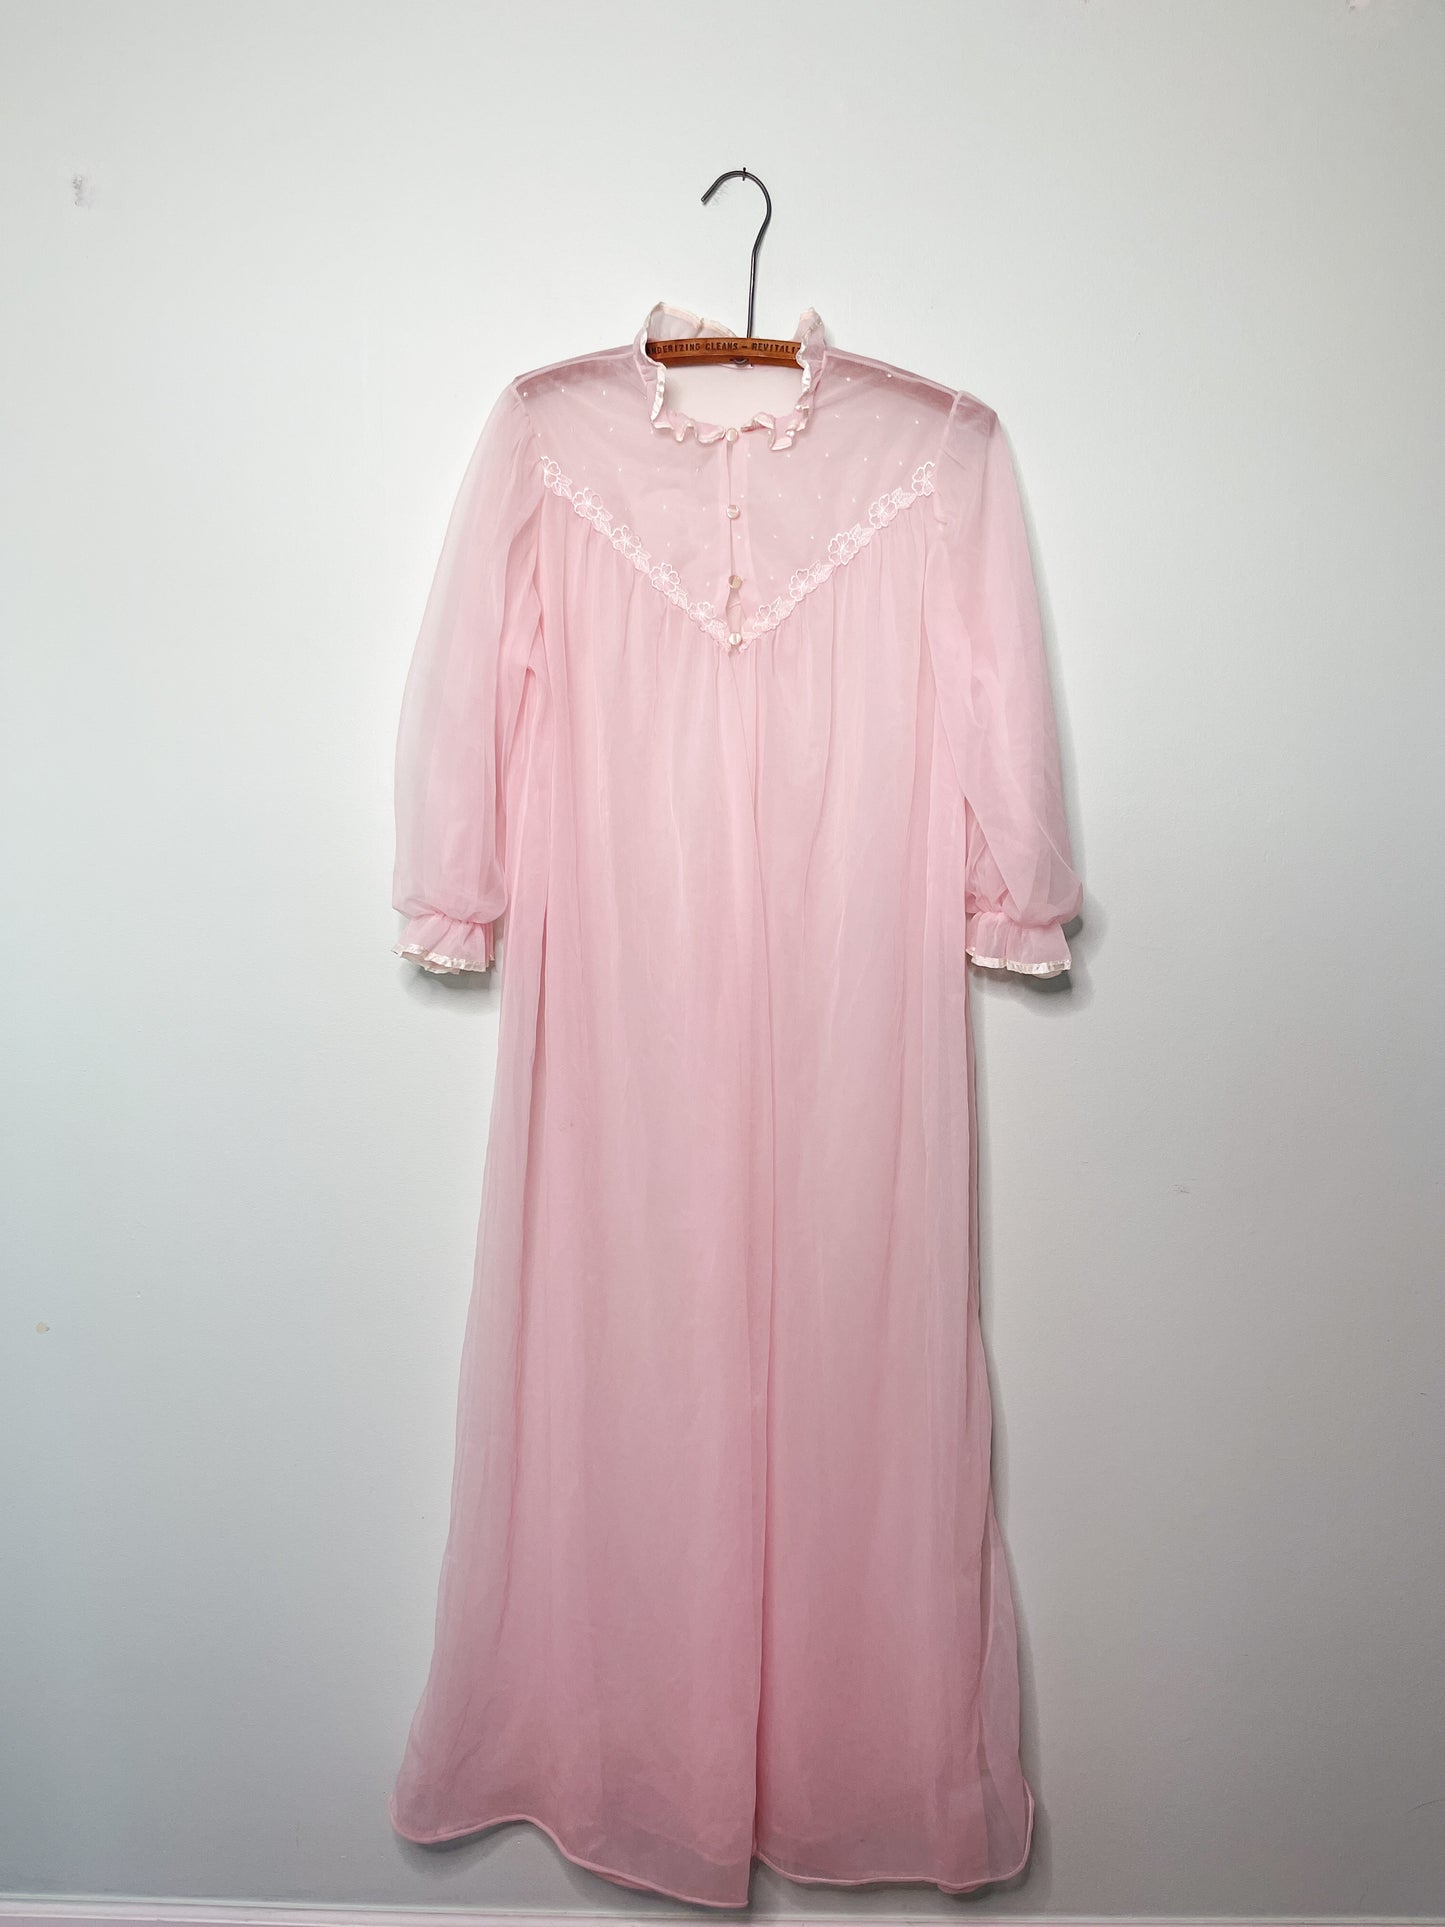 Vintage Patricia sheer pink duster/robe